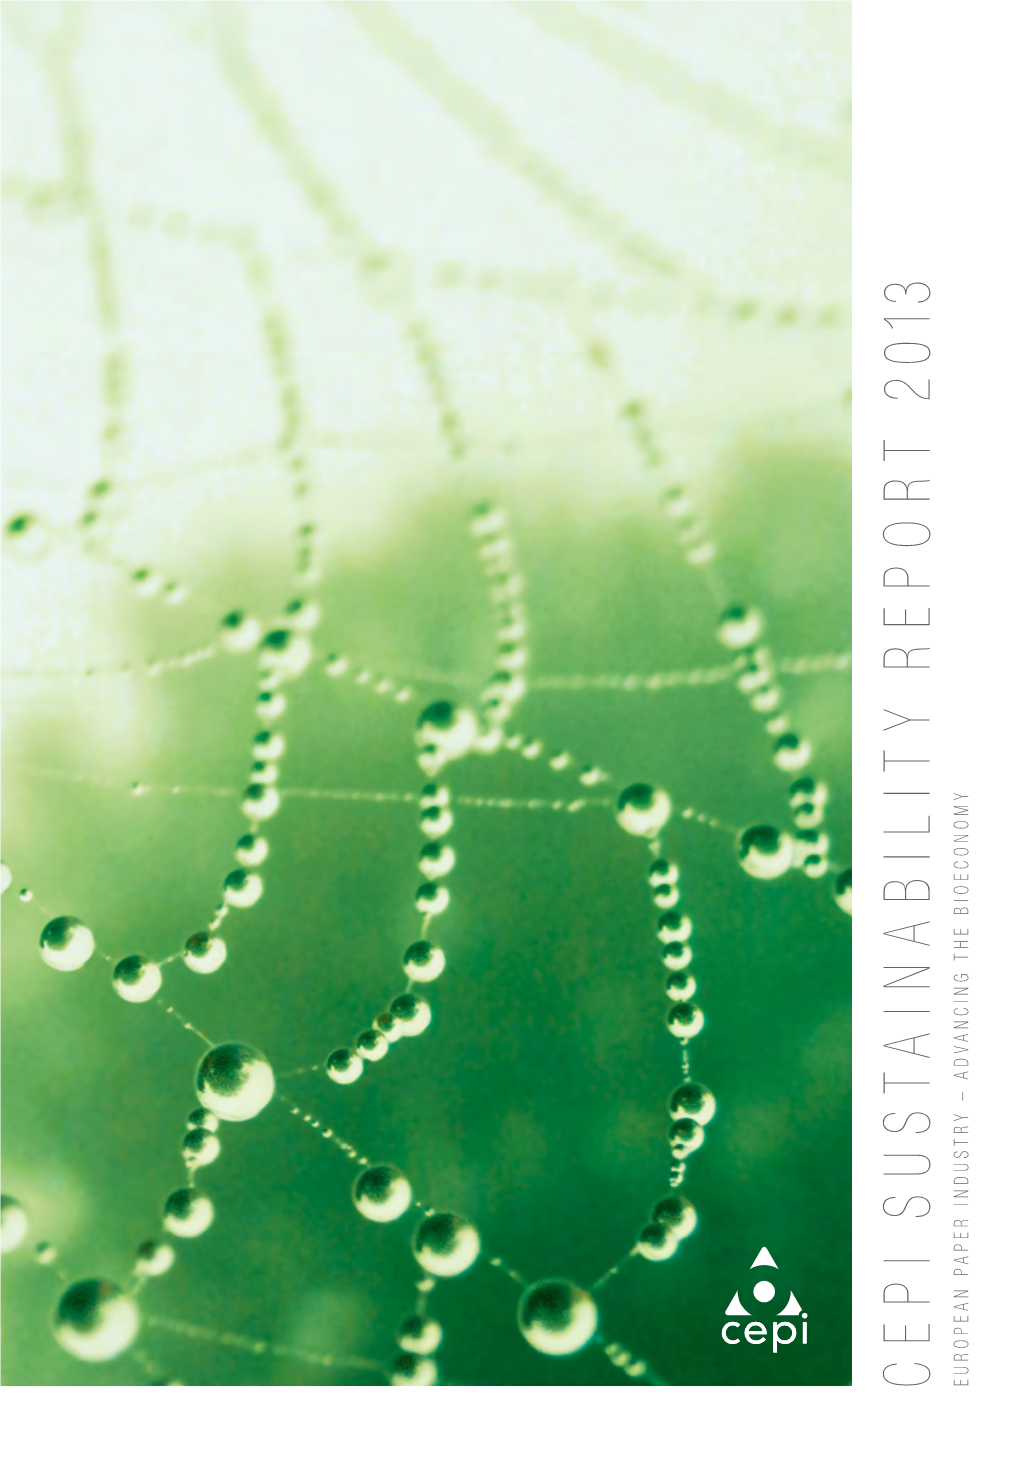 CEPI Sustainability Report, 2013